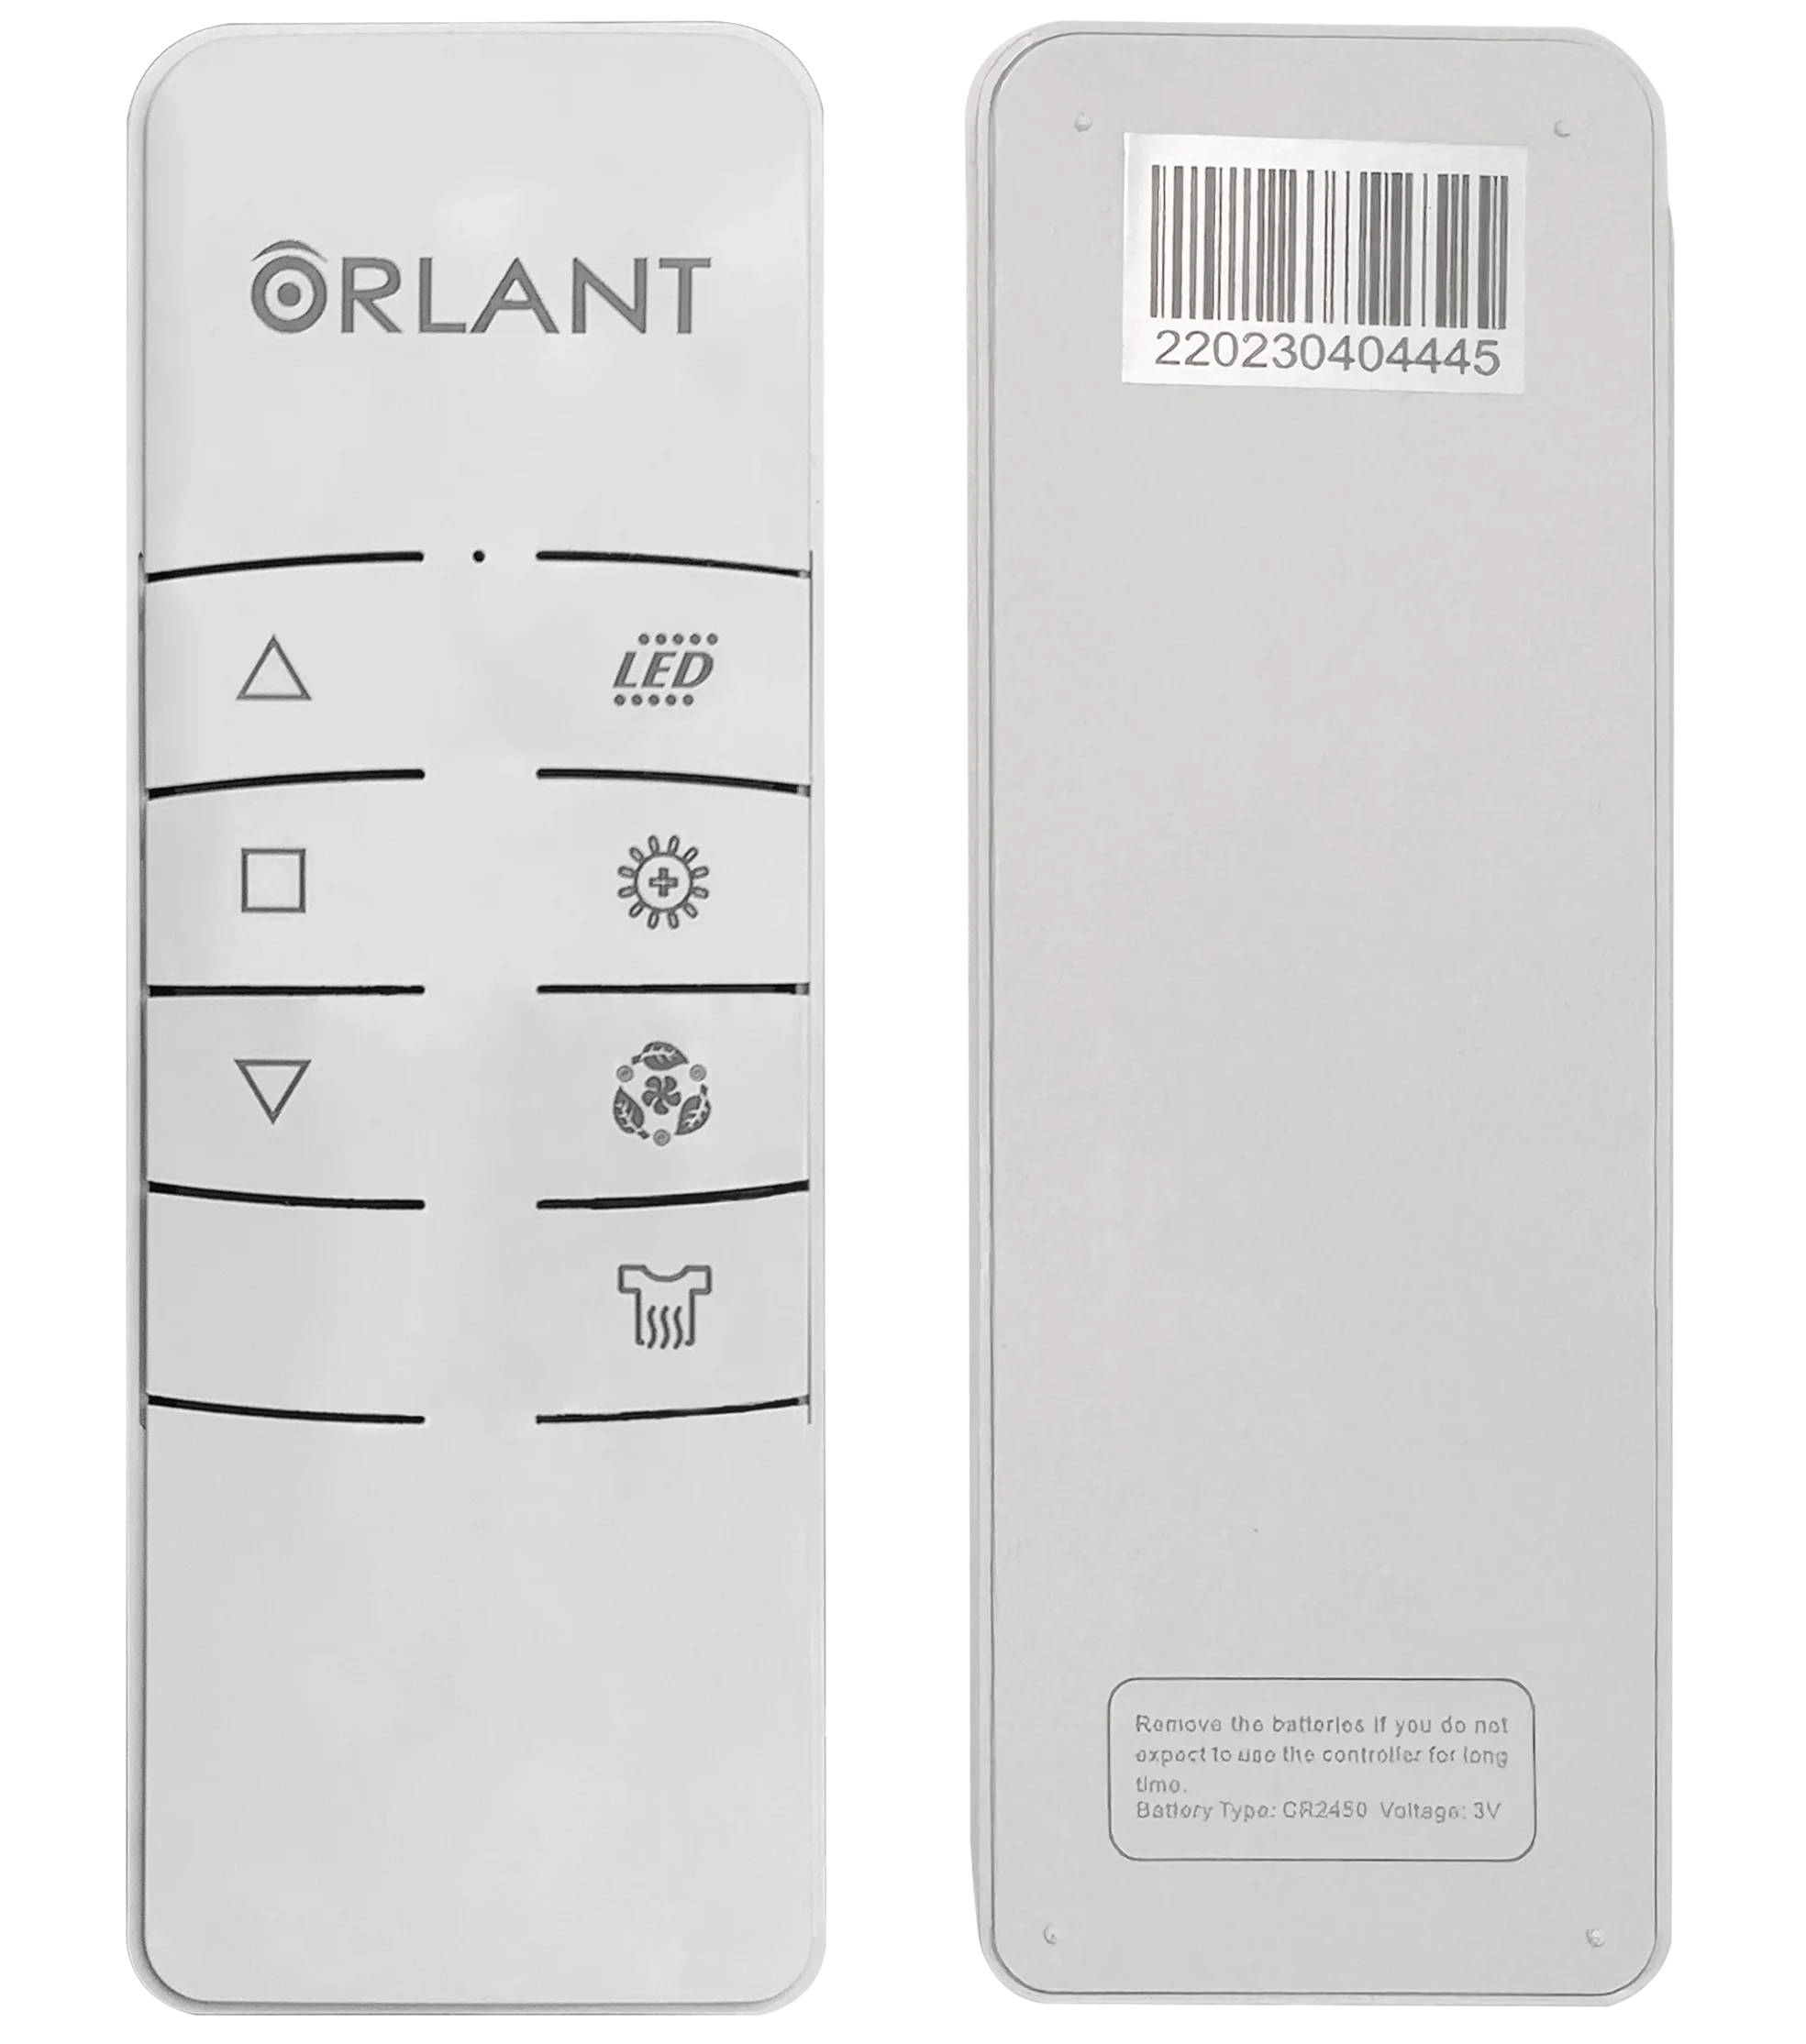 Orlant International Pte Ltd